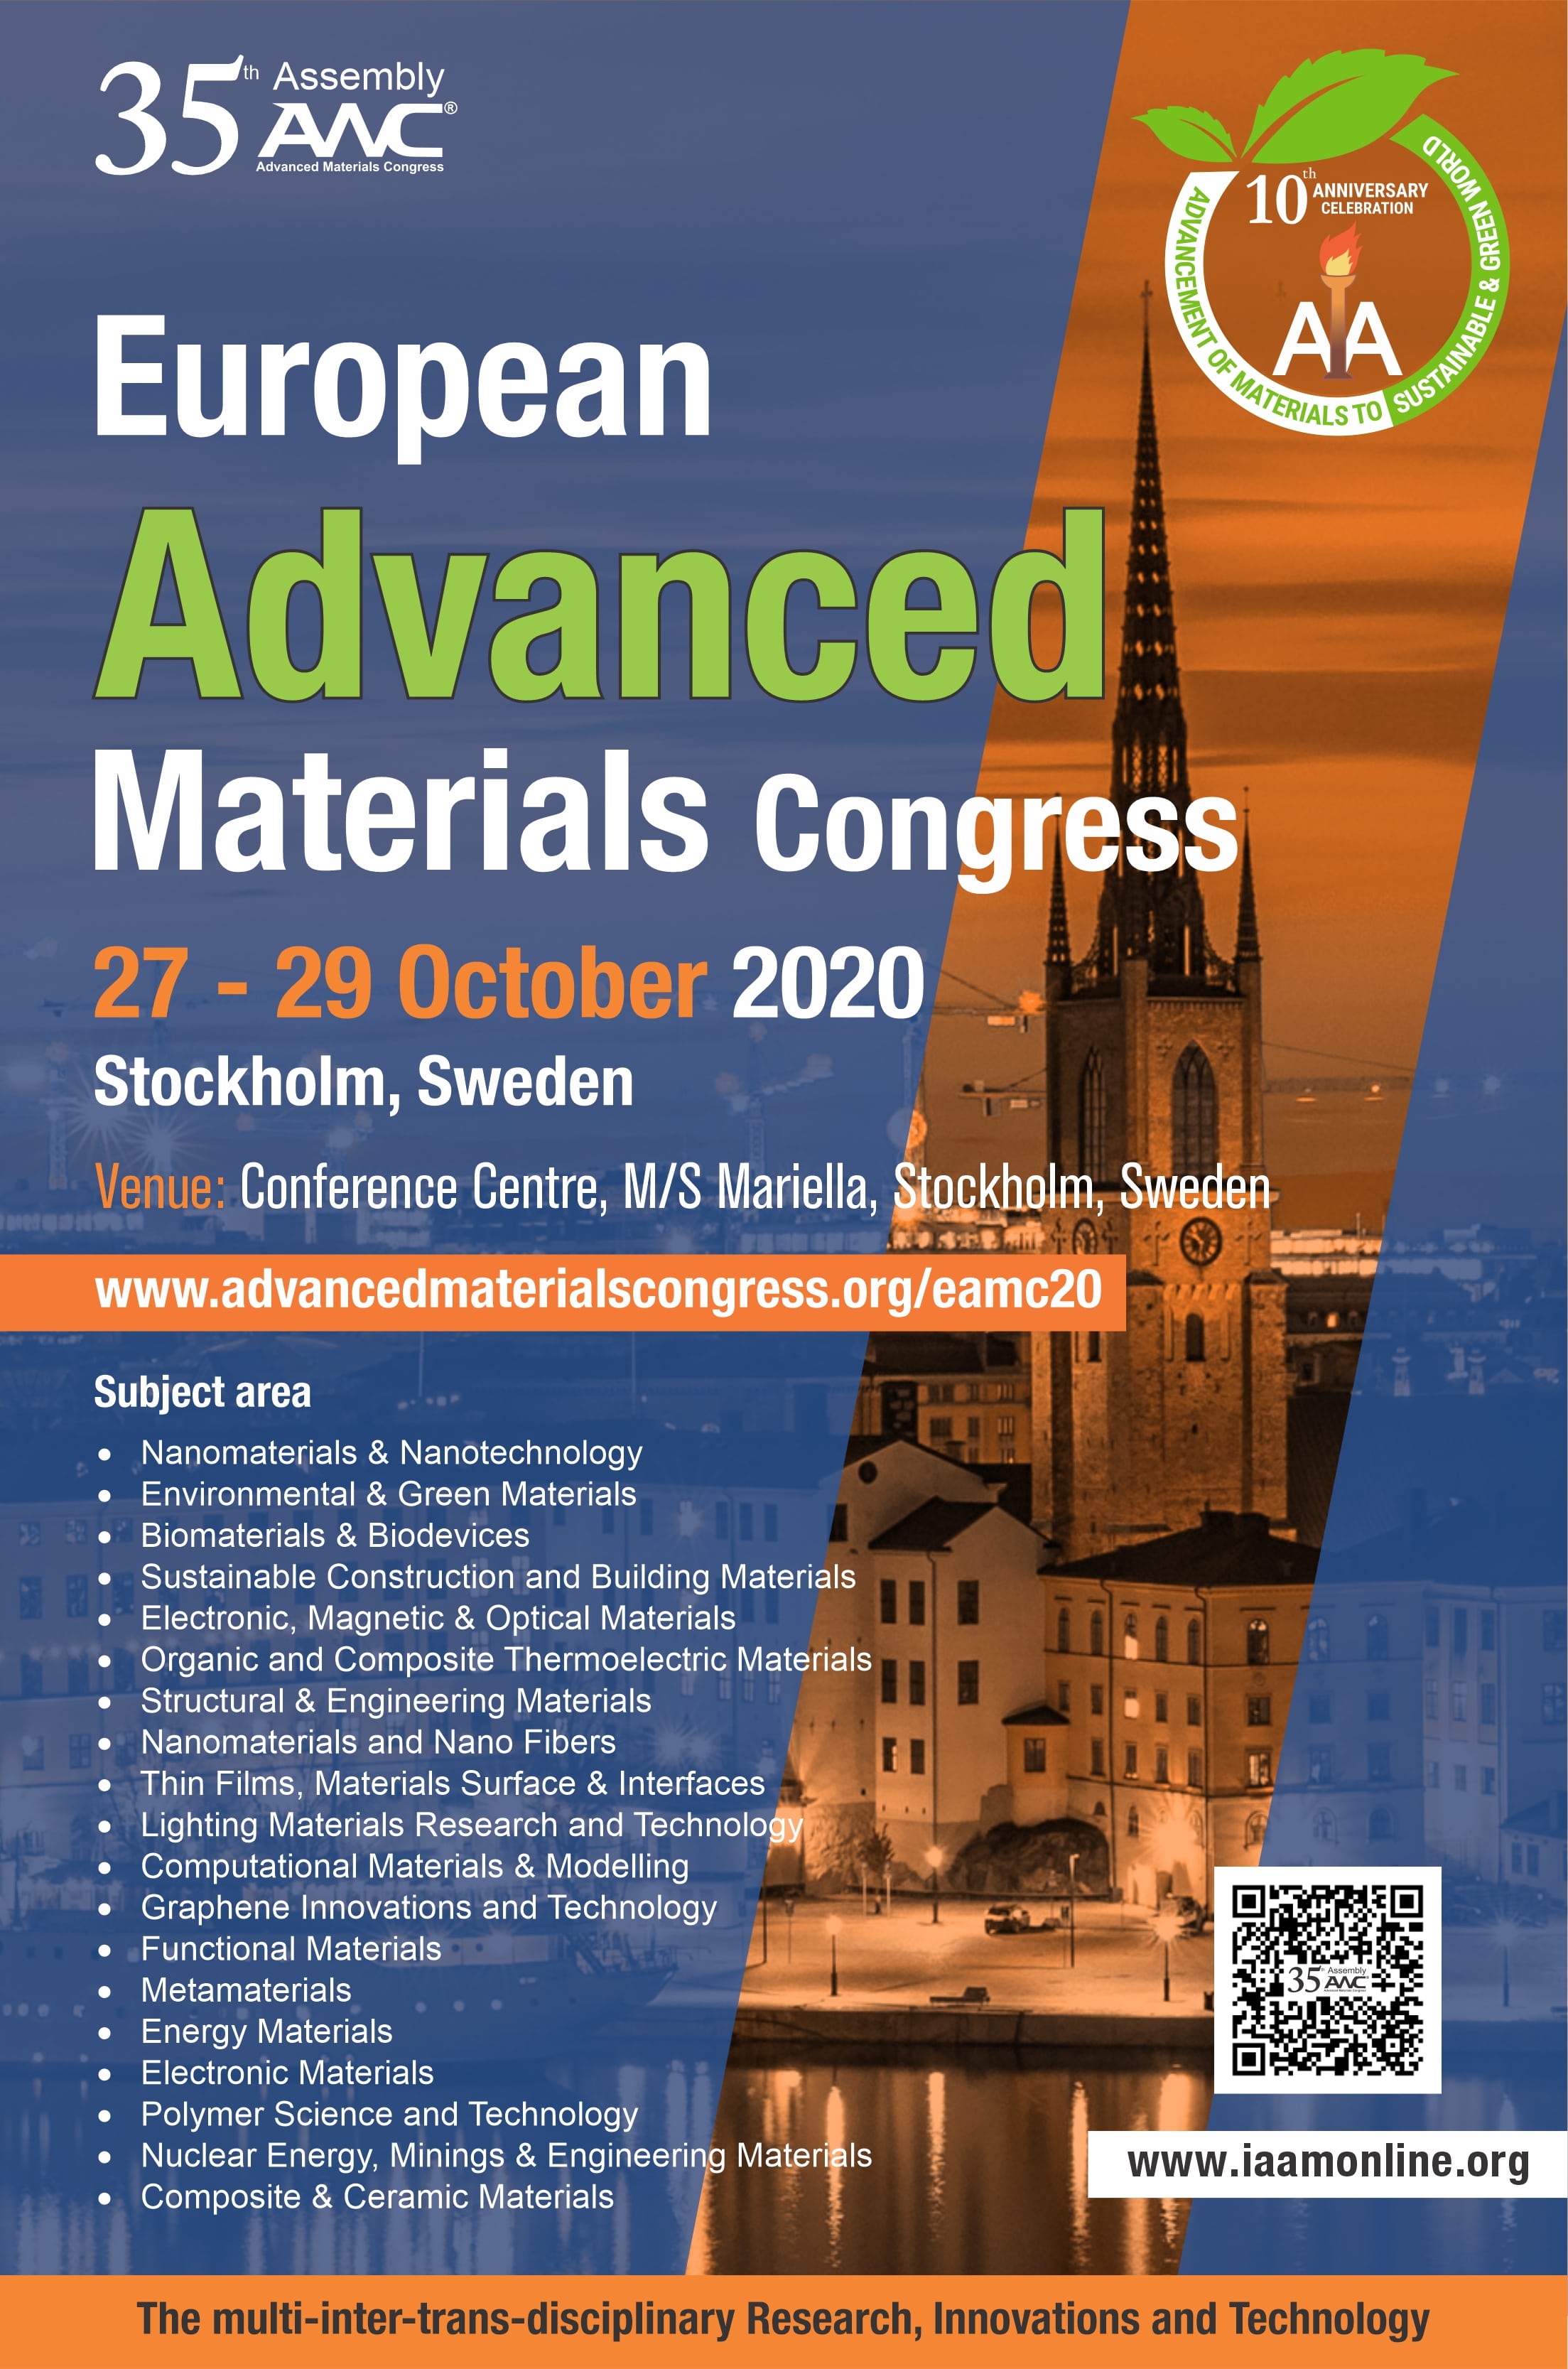 European Advanced Materials Congress, Stockholm, Sweden